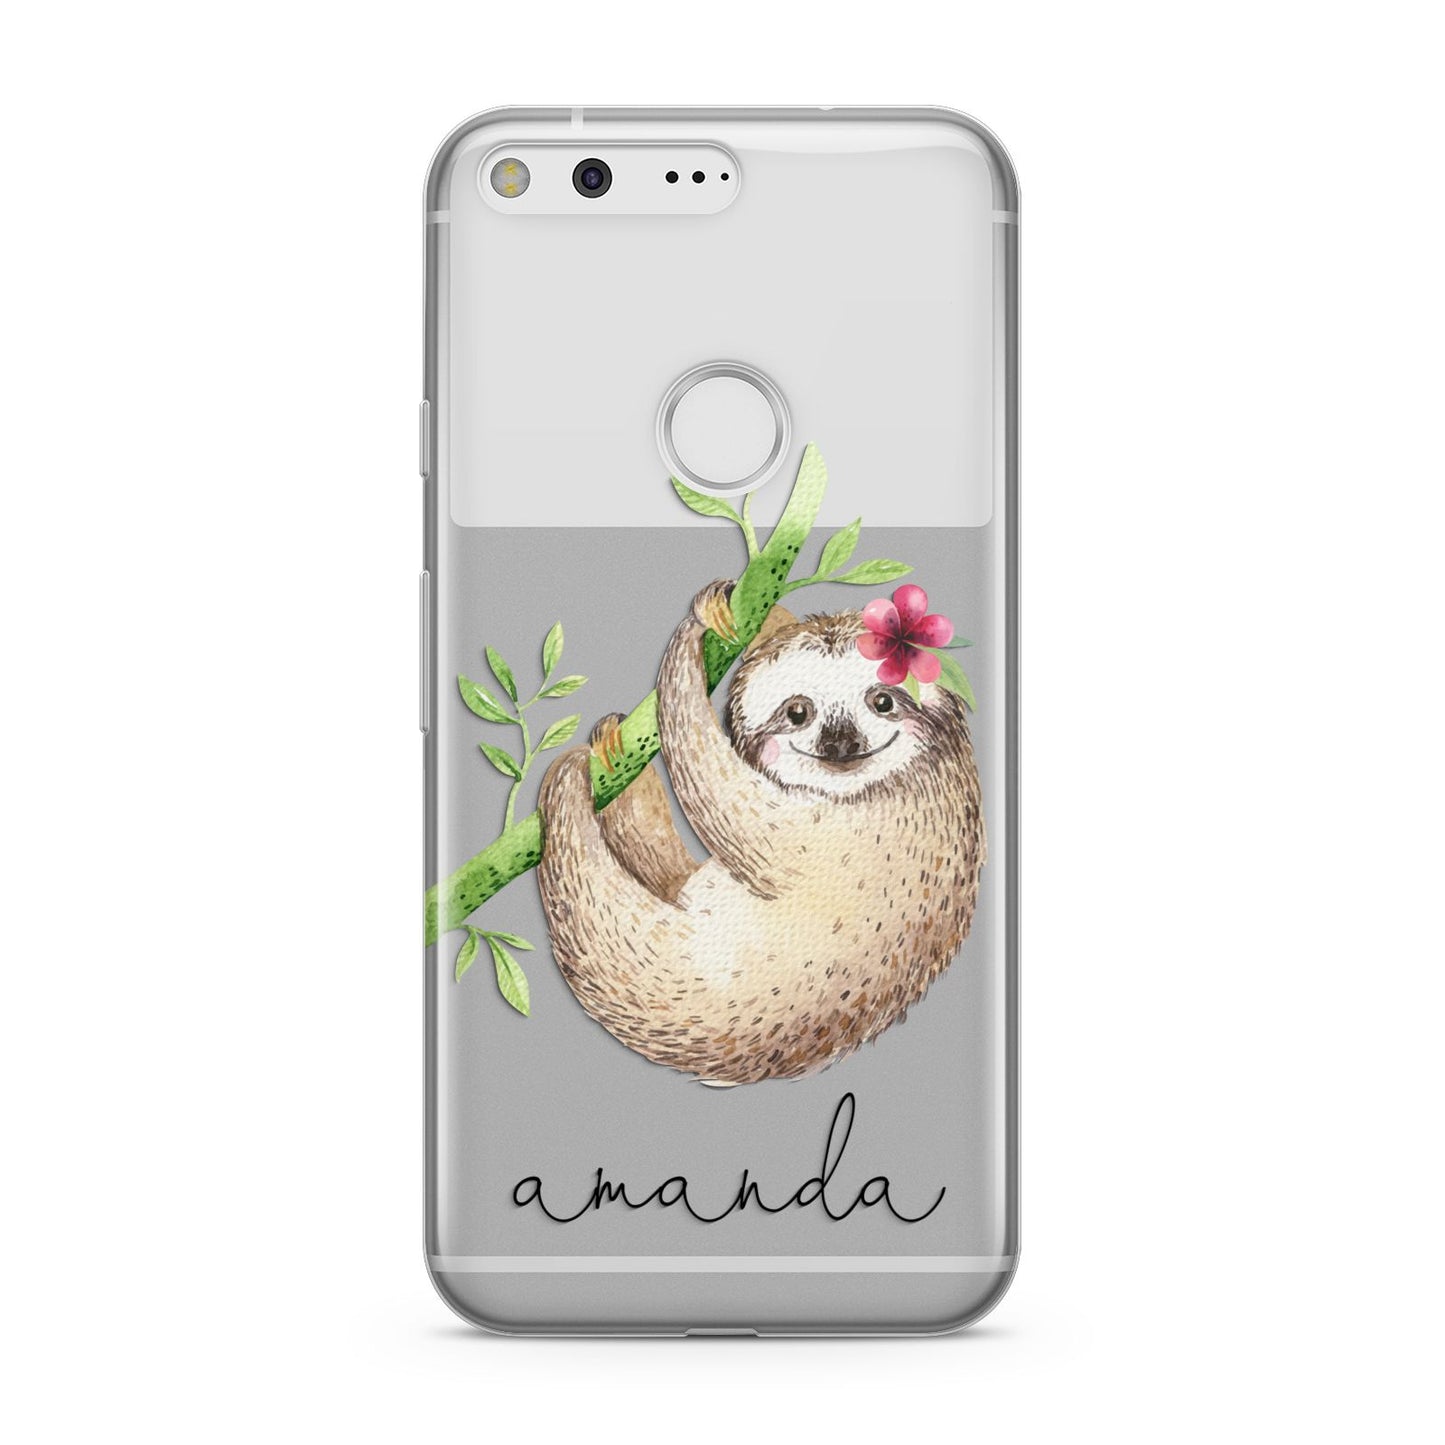 Personalised Sloth Google Pixel Case